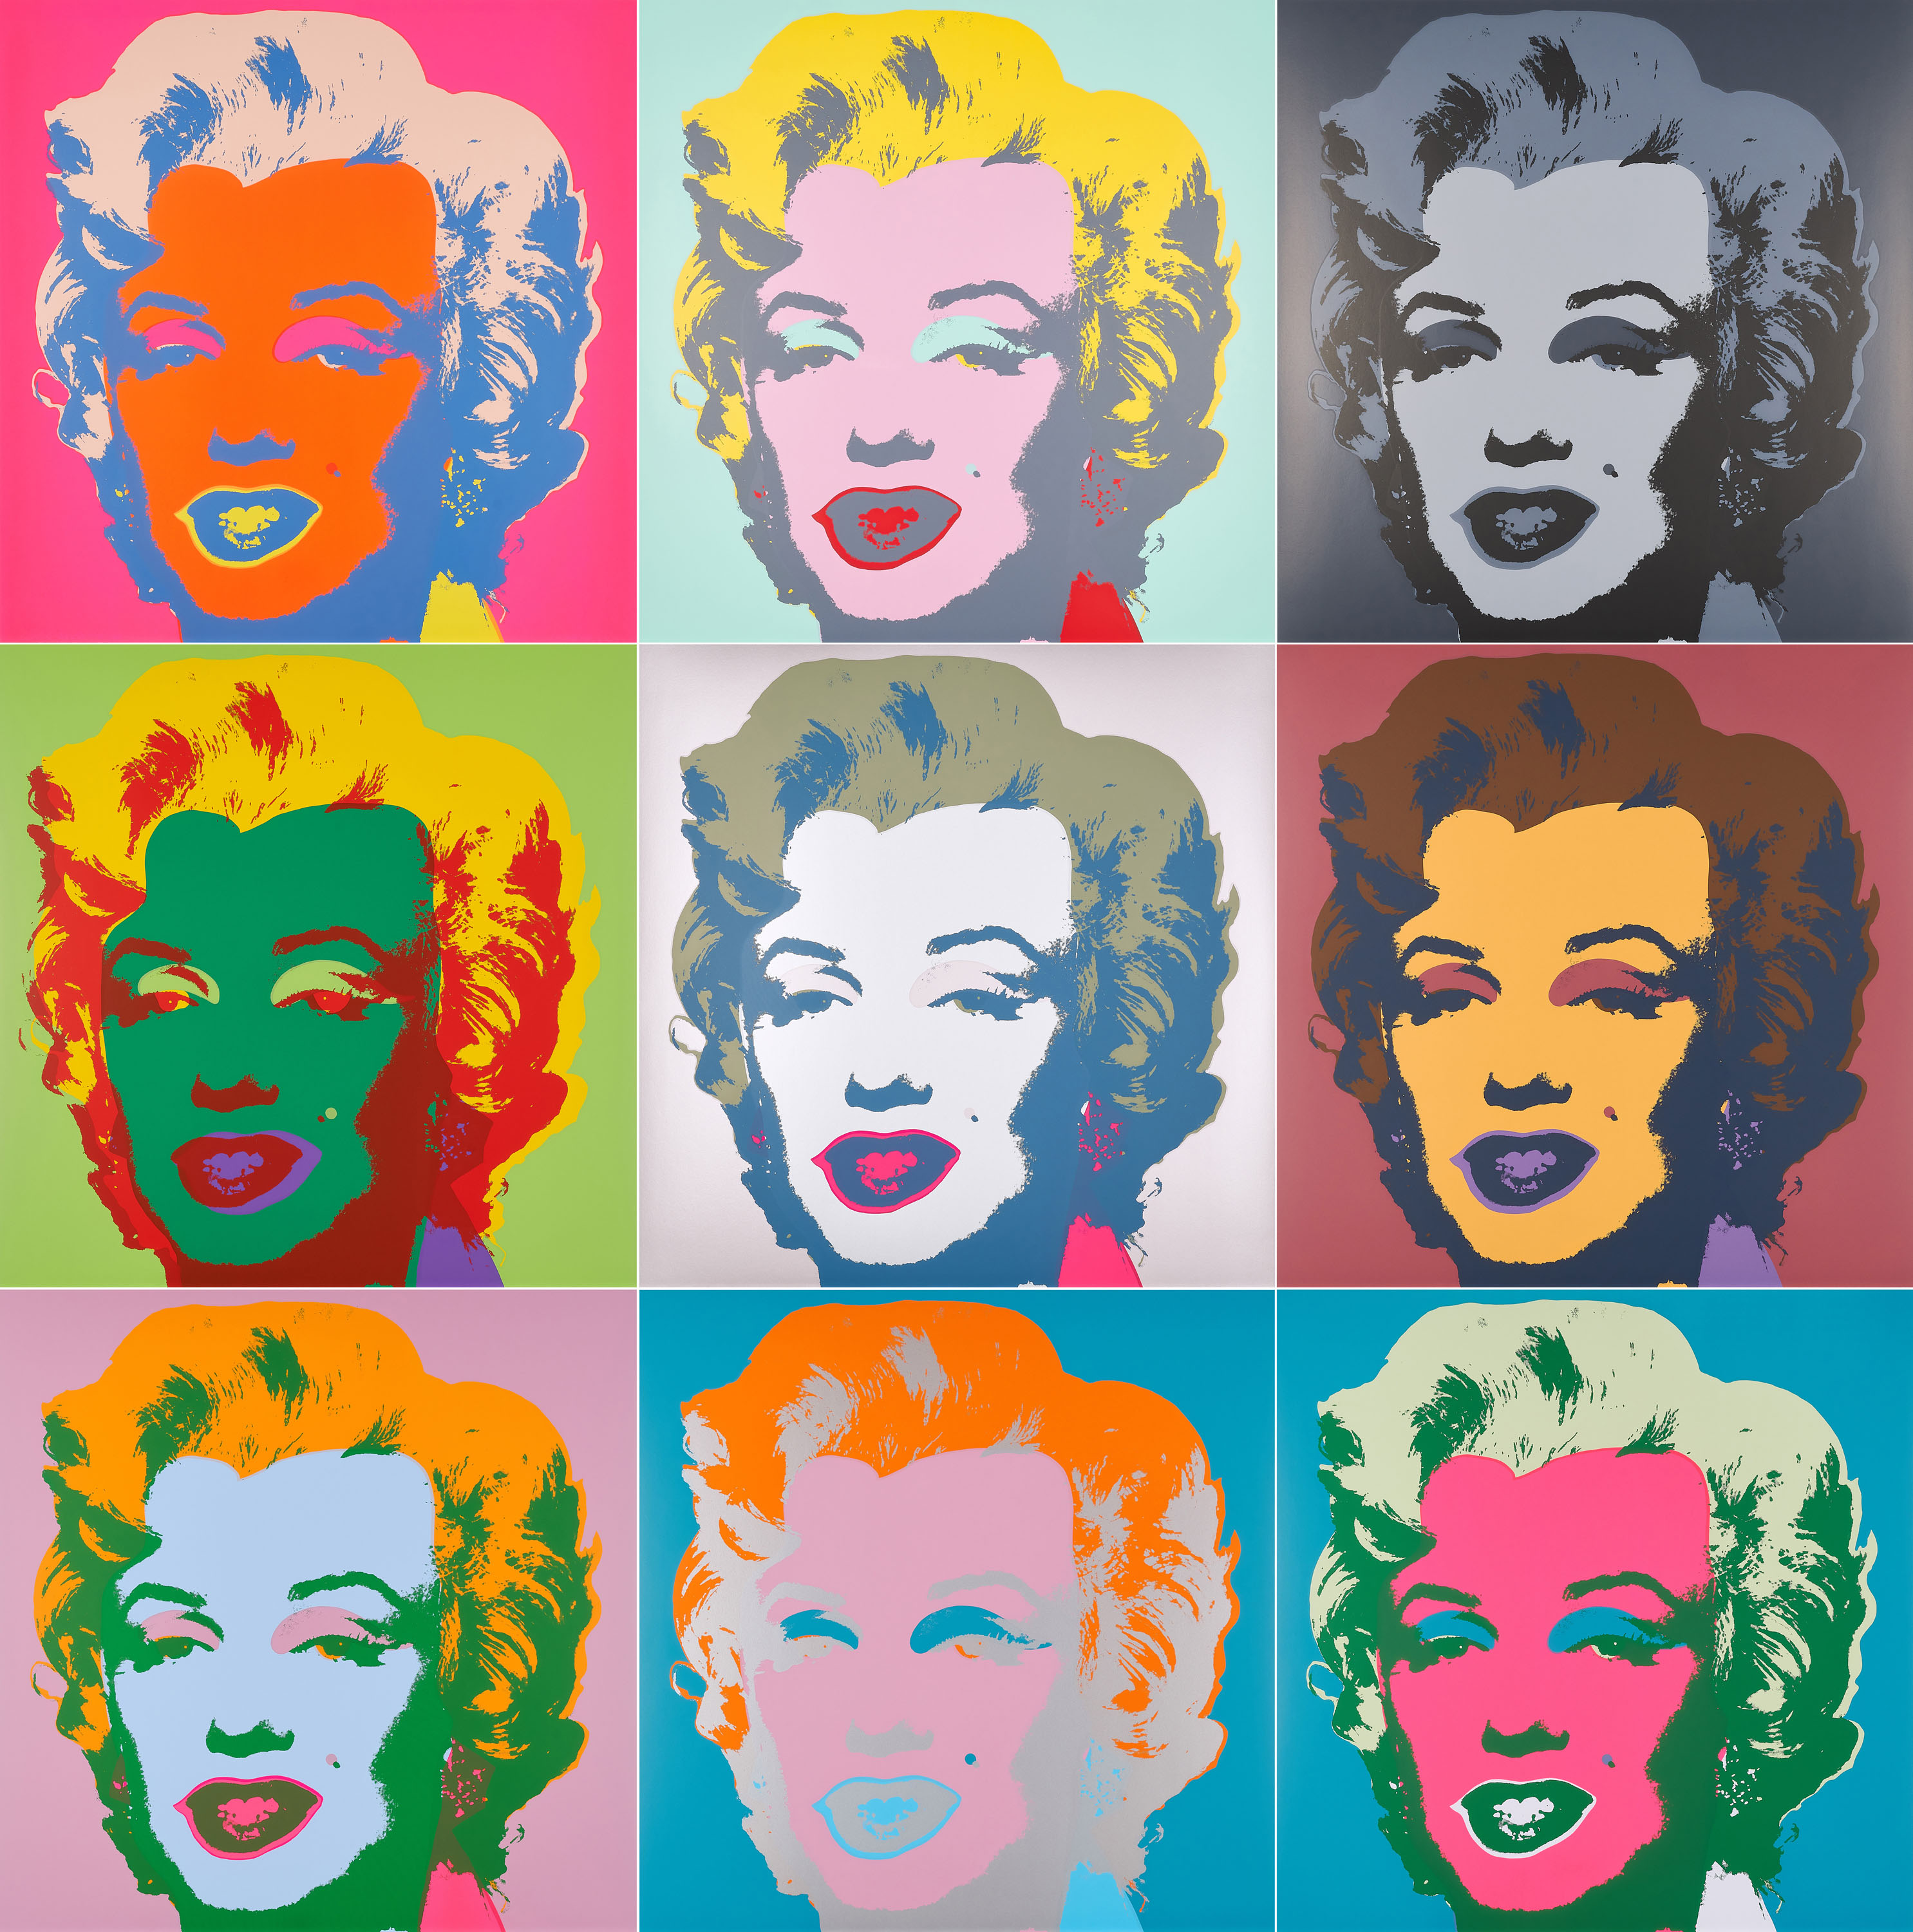 Andy Warhol - Marilyn Monroe Portfolio, 73940-1, Van Ham Kunstauktionen